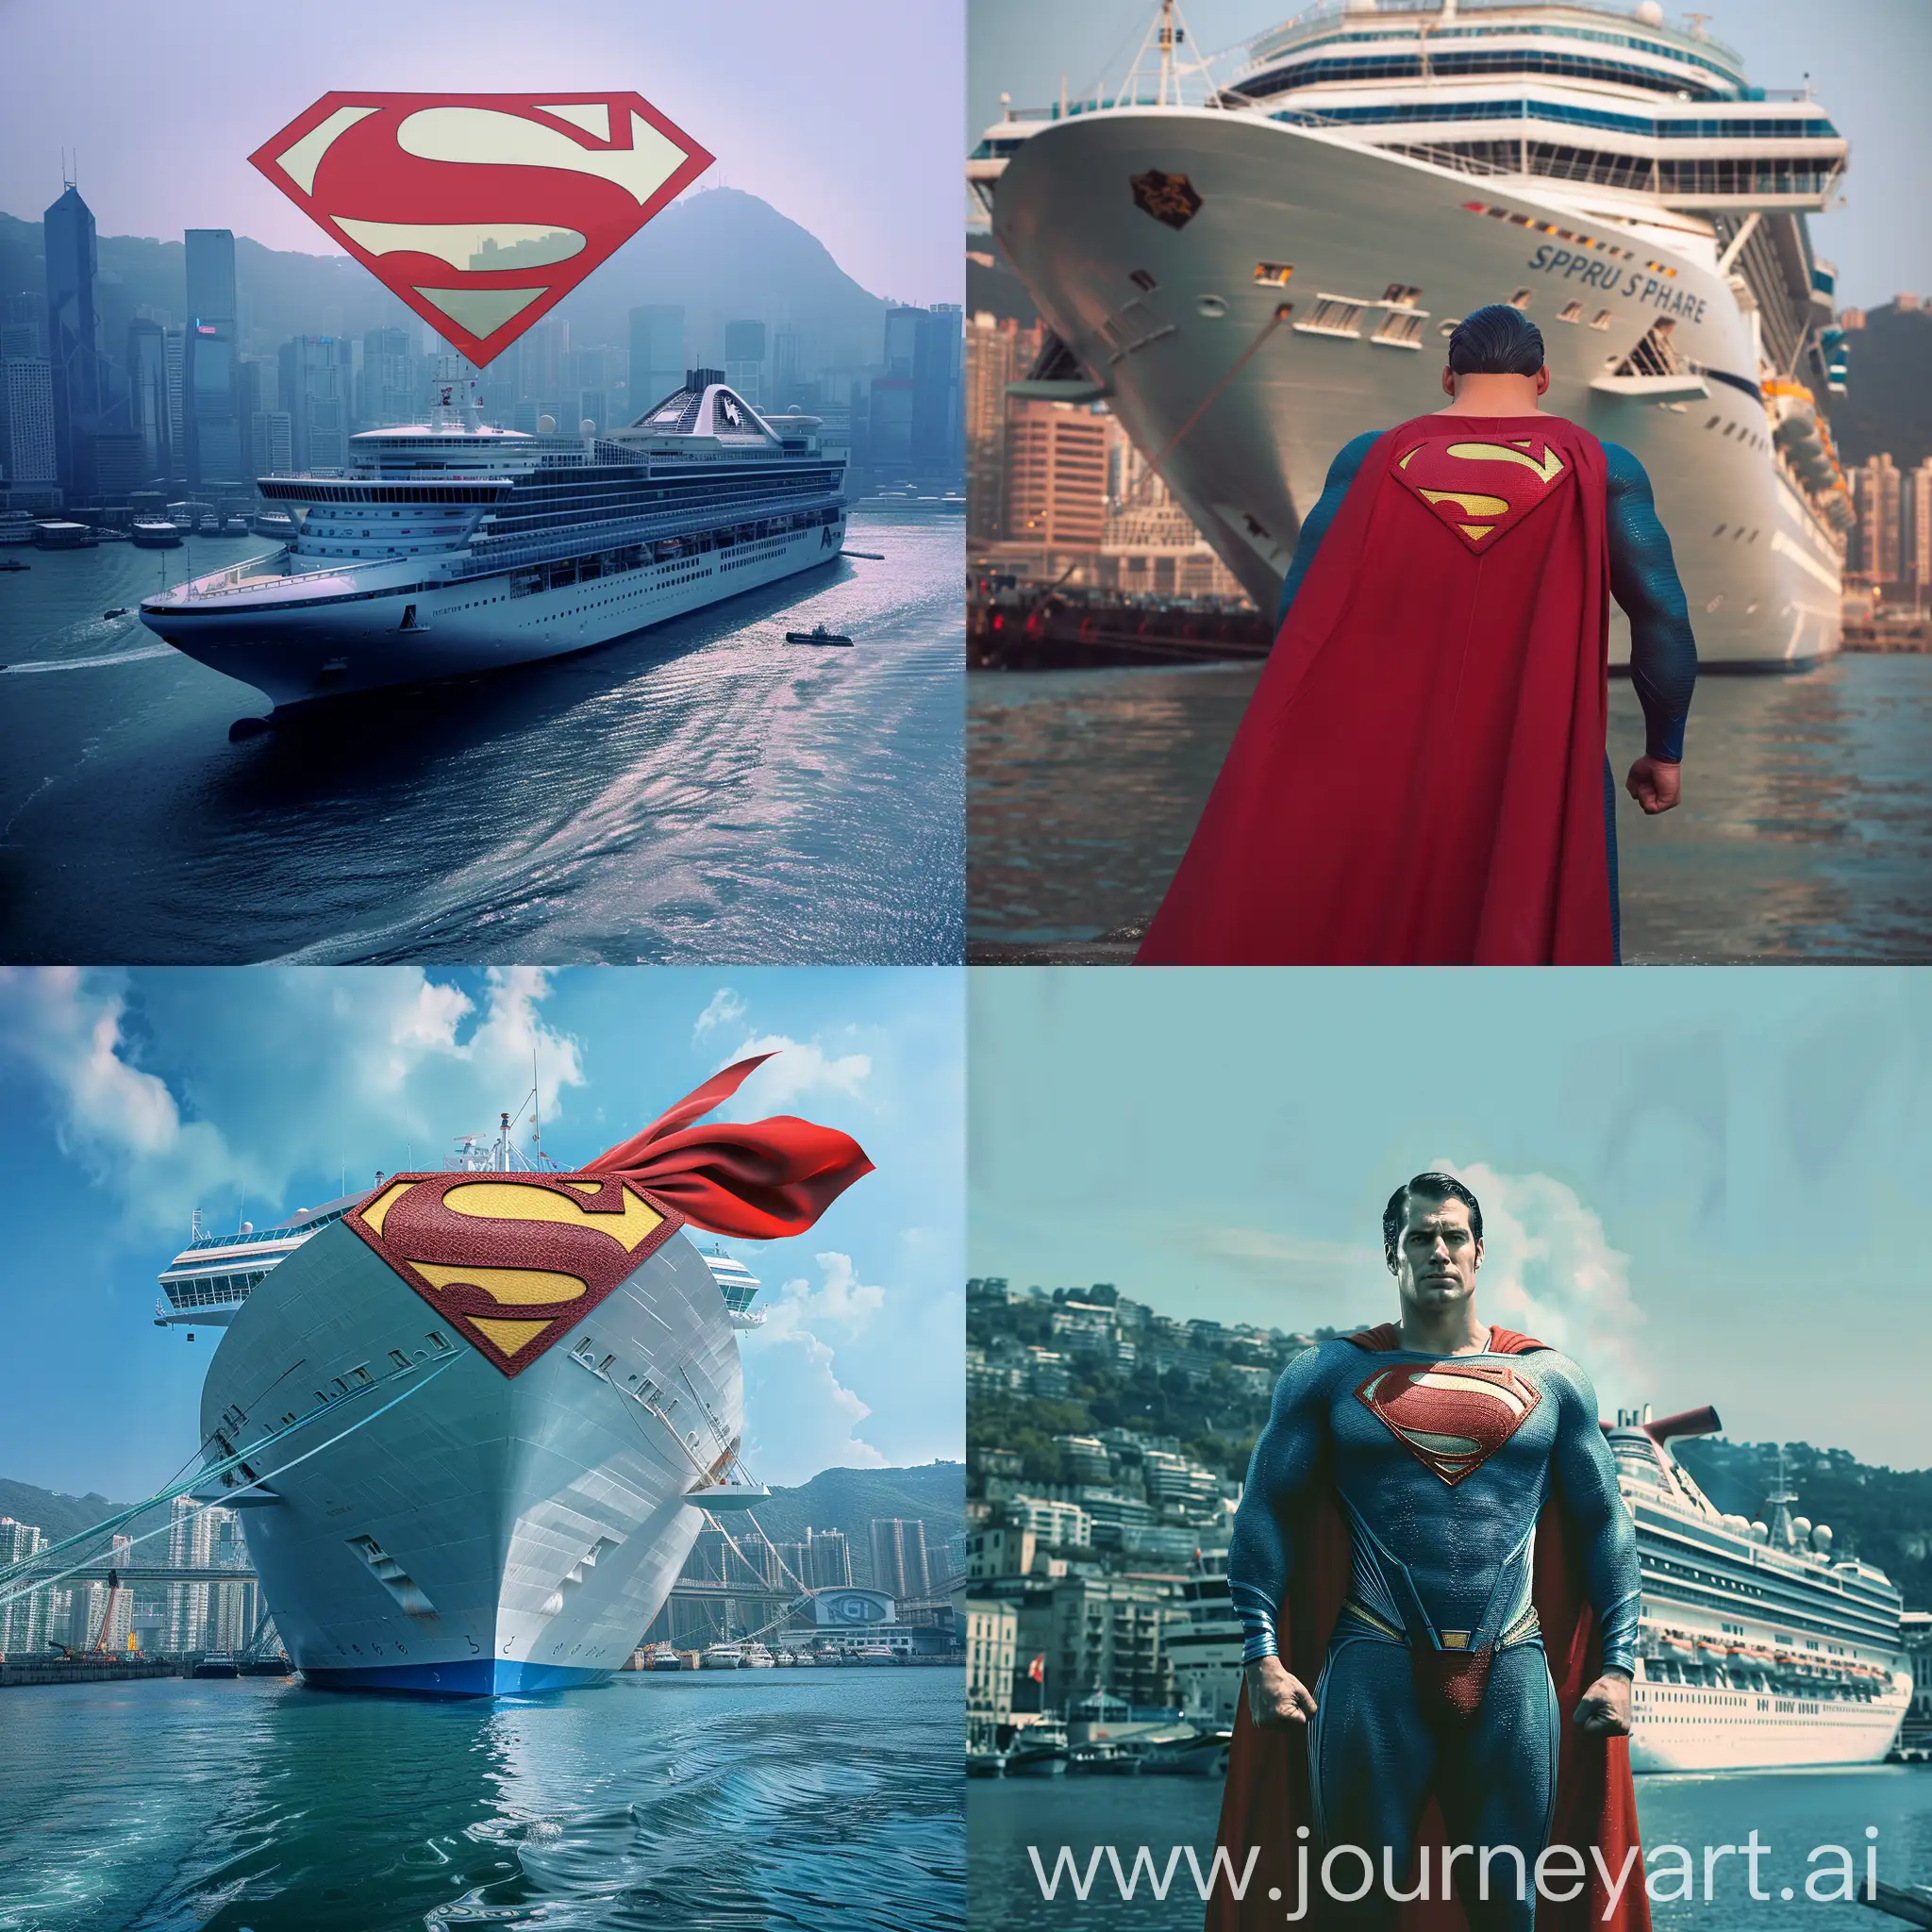 A Superman like Cruise ship background on harbor